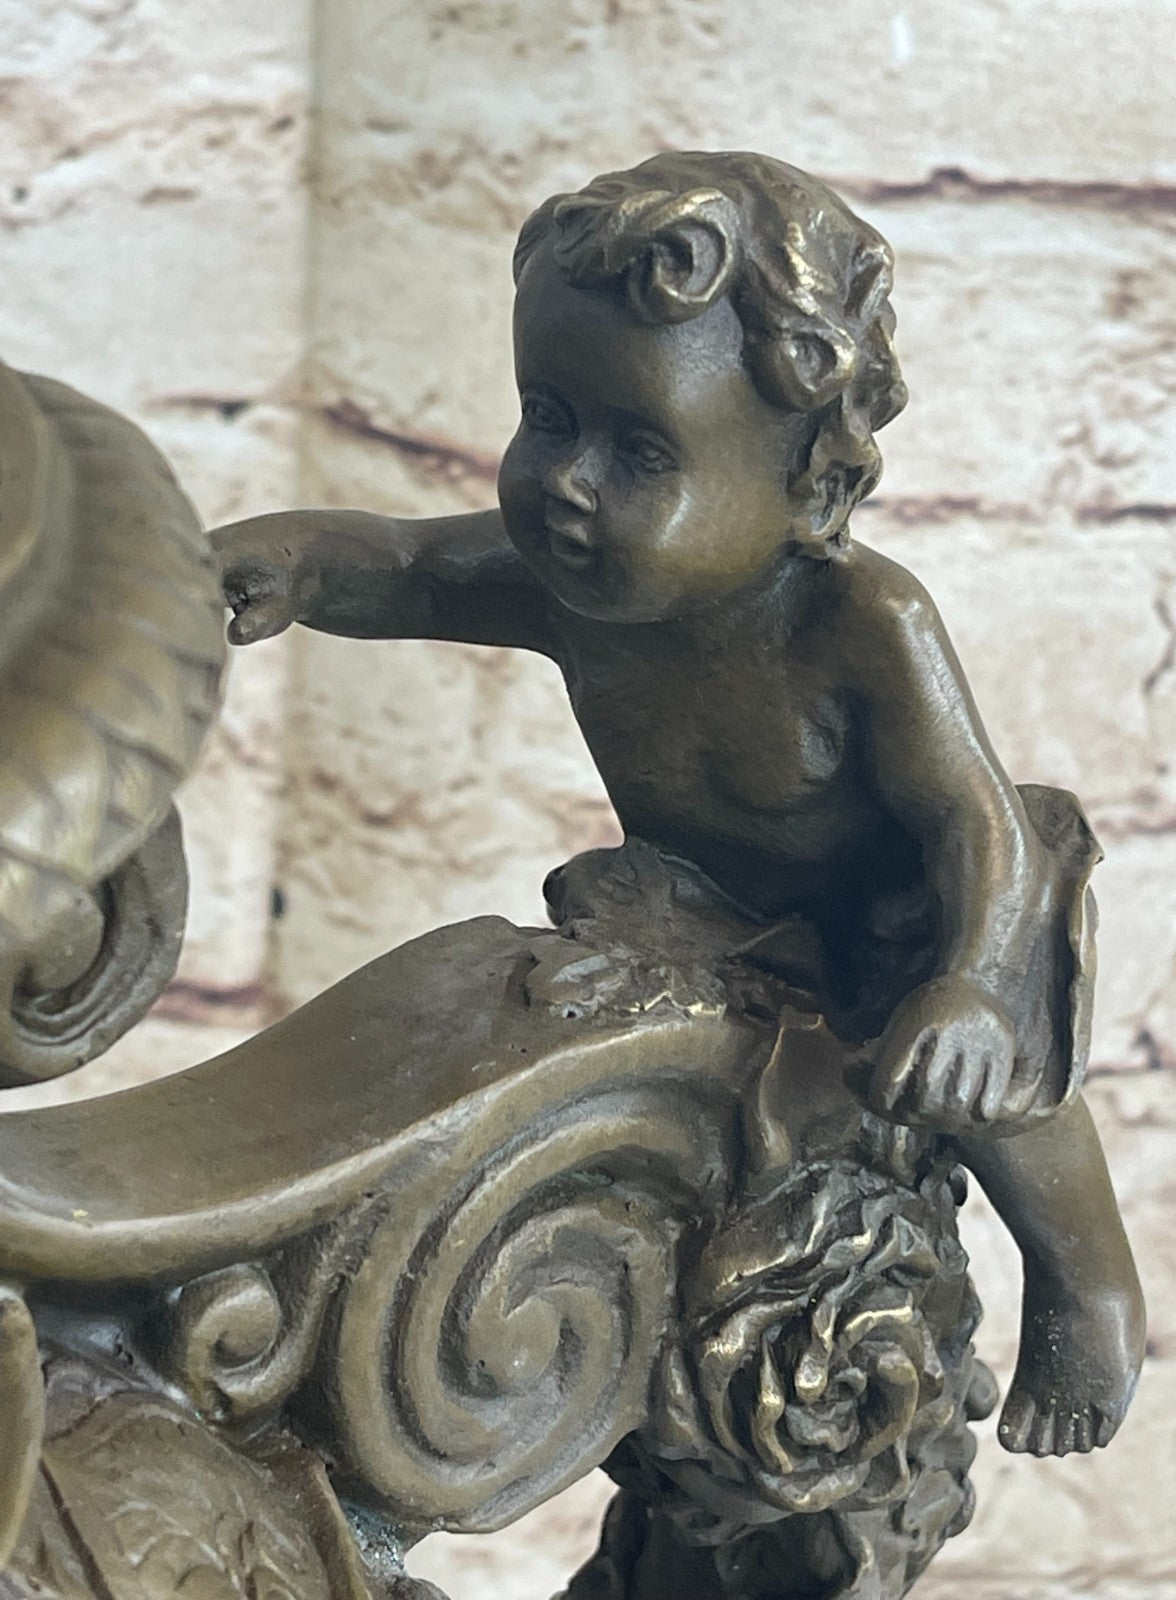 Handcrafted Urn Mythical Mythology Cherubs Baby Angel Bronze Sculpture Statue